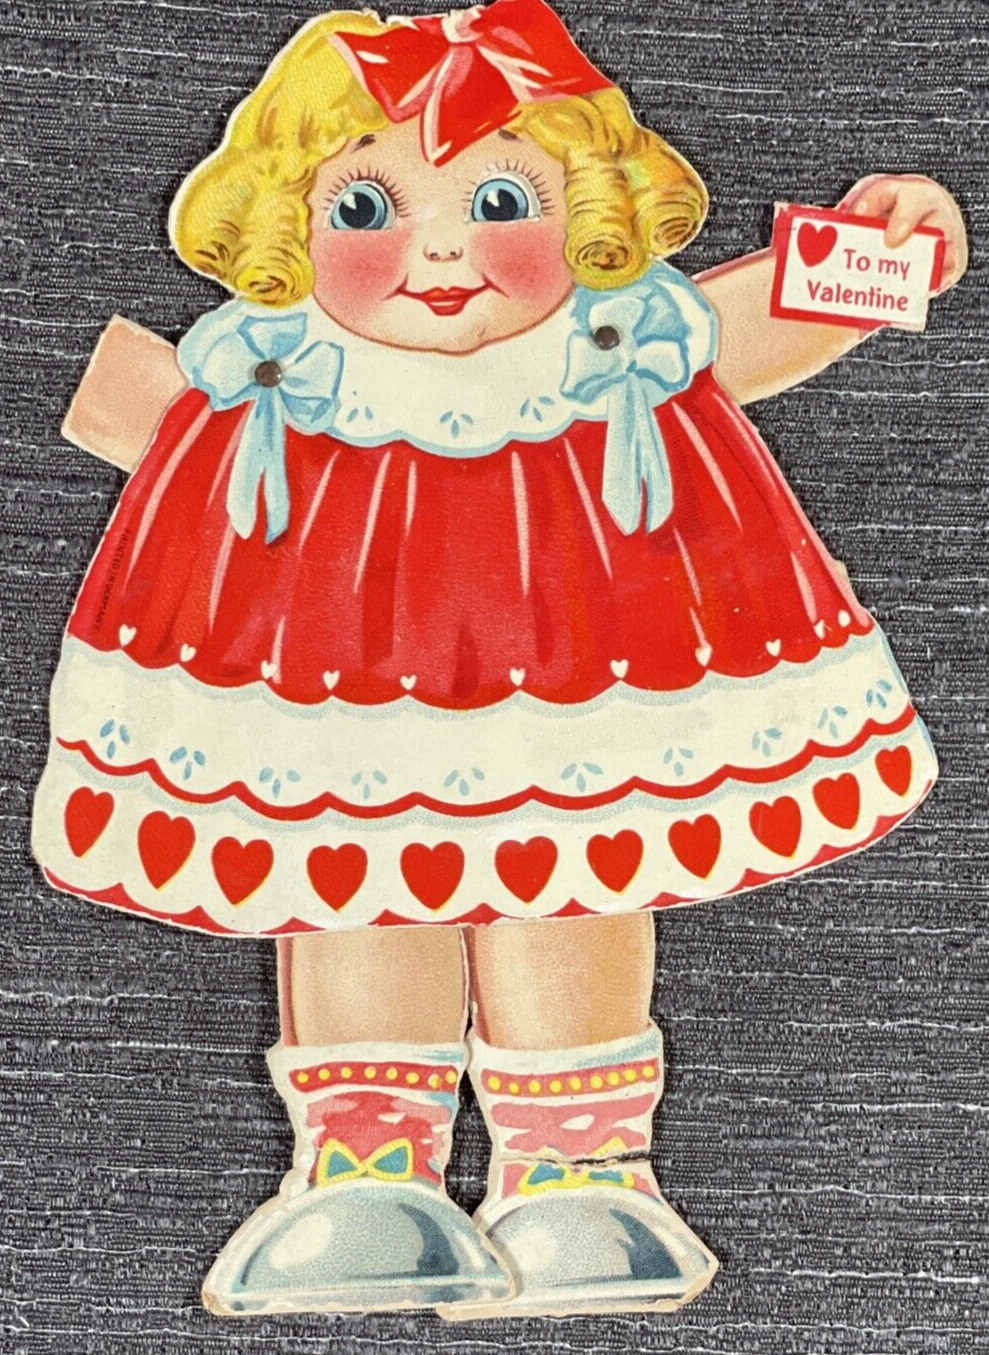 Vintage Valentine Card Mechanical Girl Red Dress Eyes Blink Legs Arms Move Torn